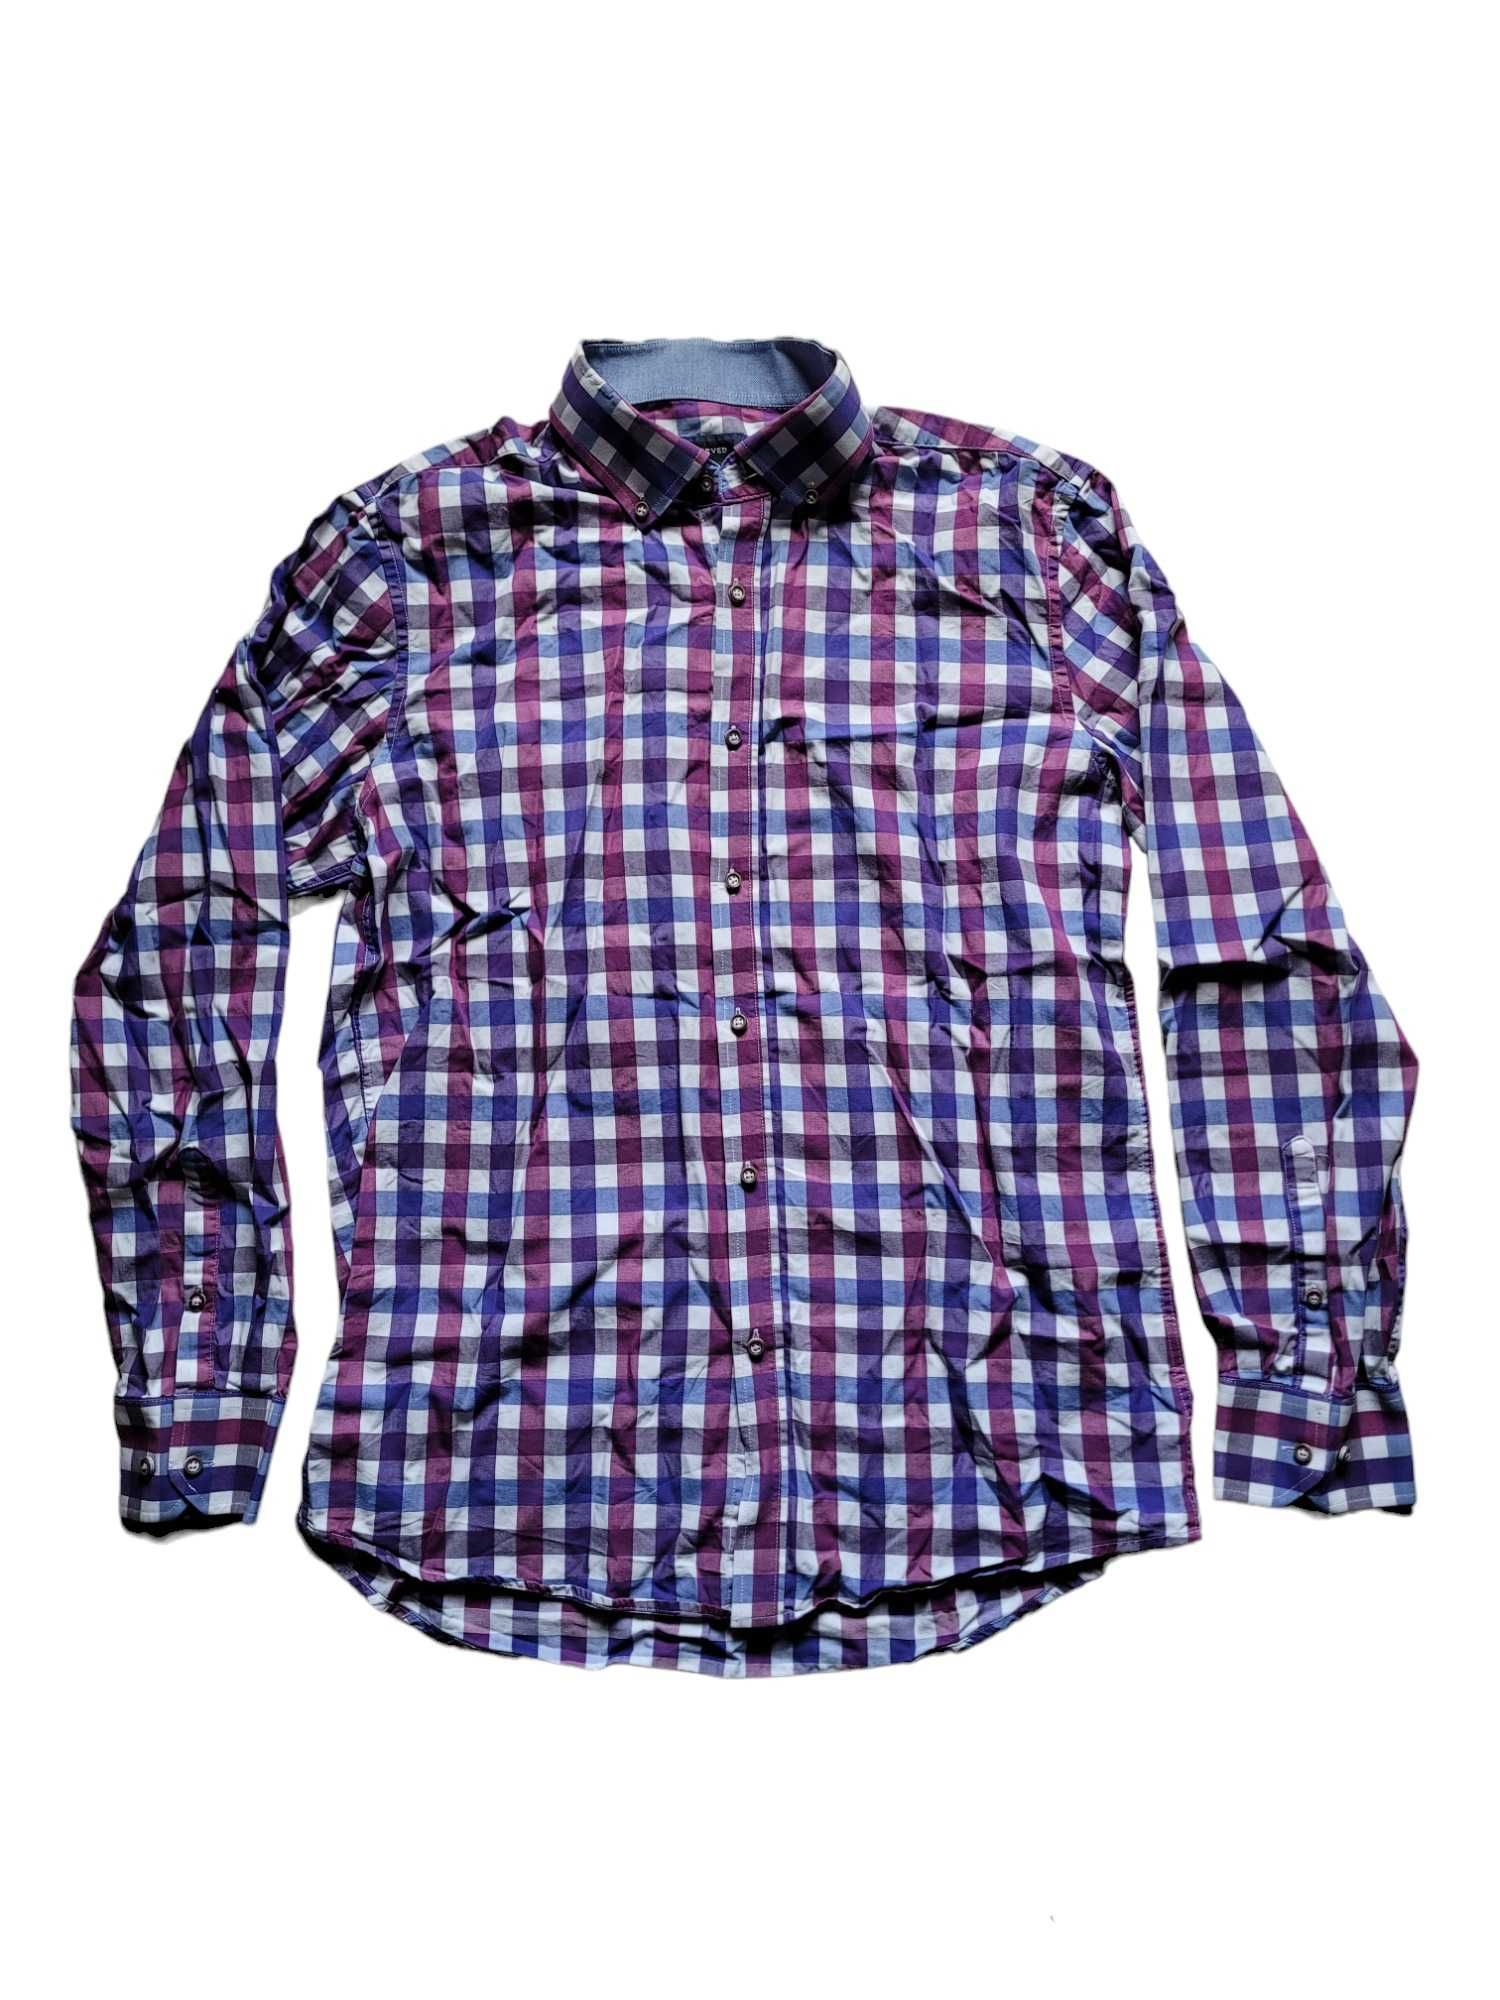 Bawełniana koszula męska Reserved wzór w kratkę 42 Regular Fit